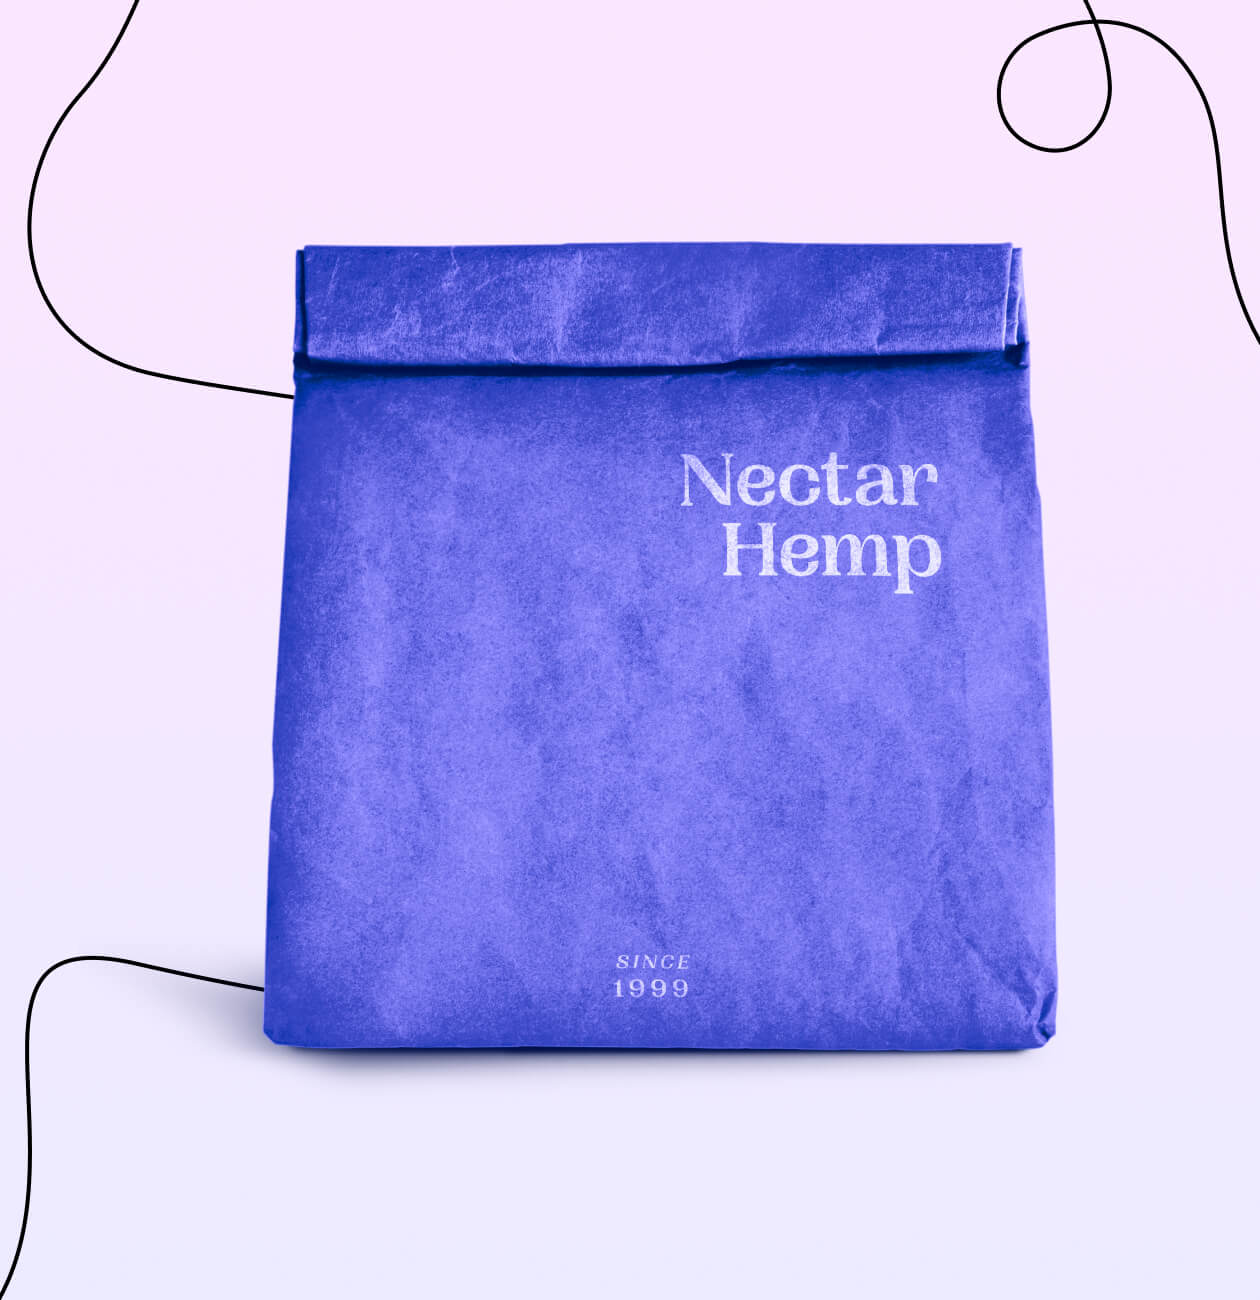 Nectar – CBD products landing page - Website Development - Photo 2